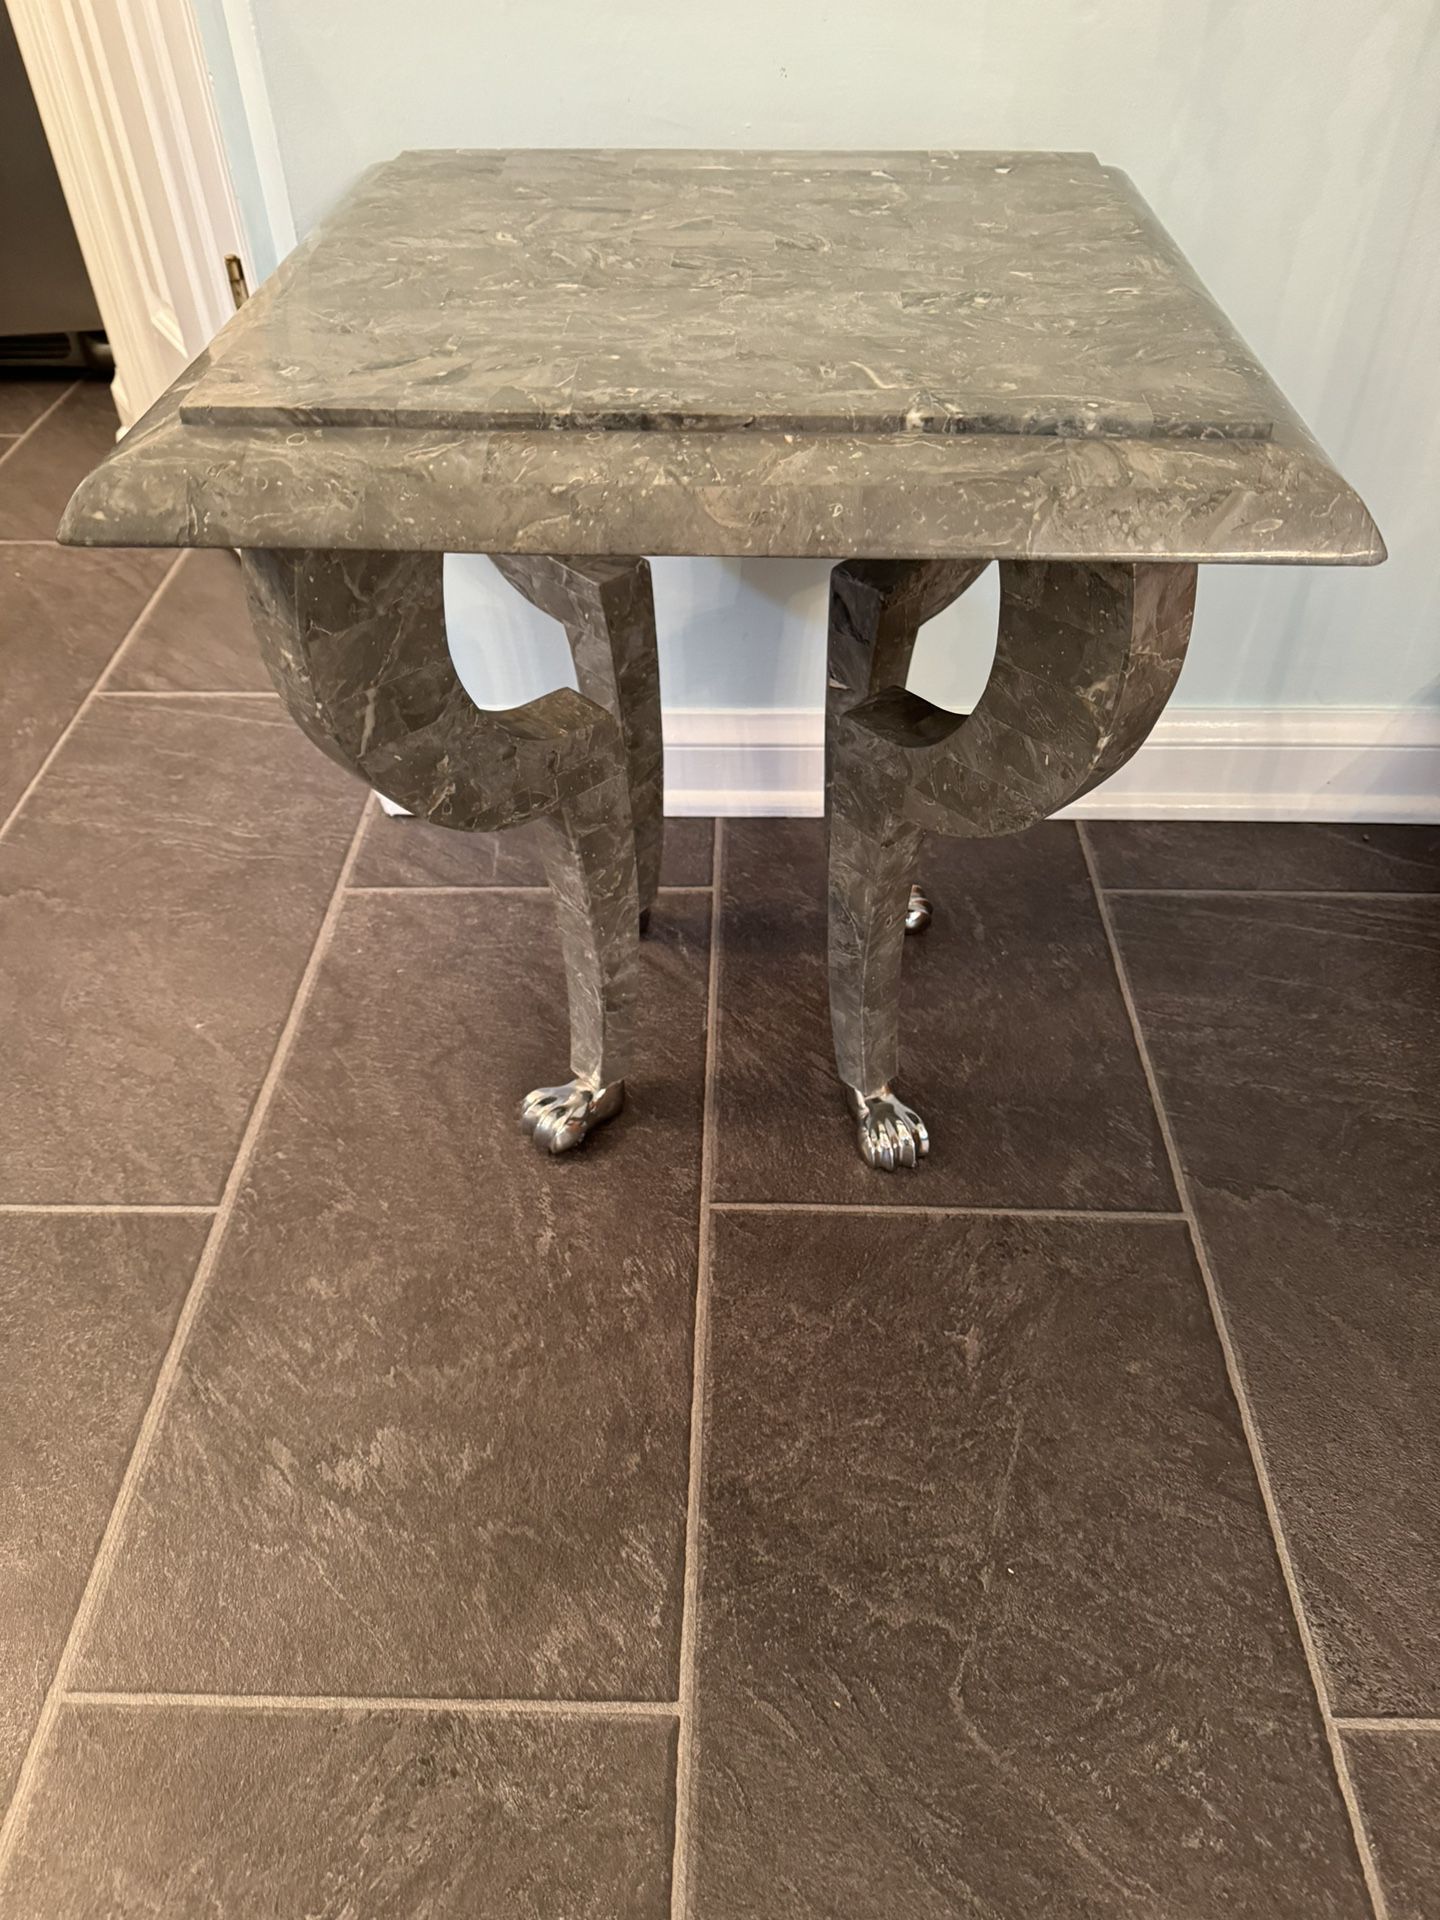 Granite Side Table $25